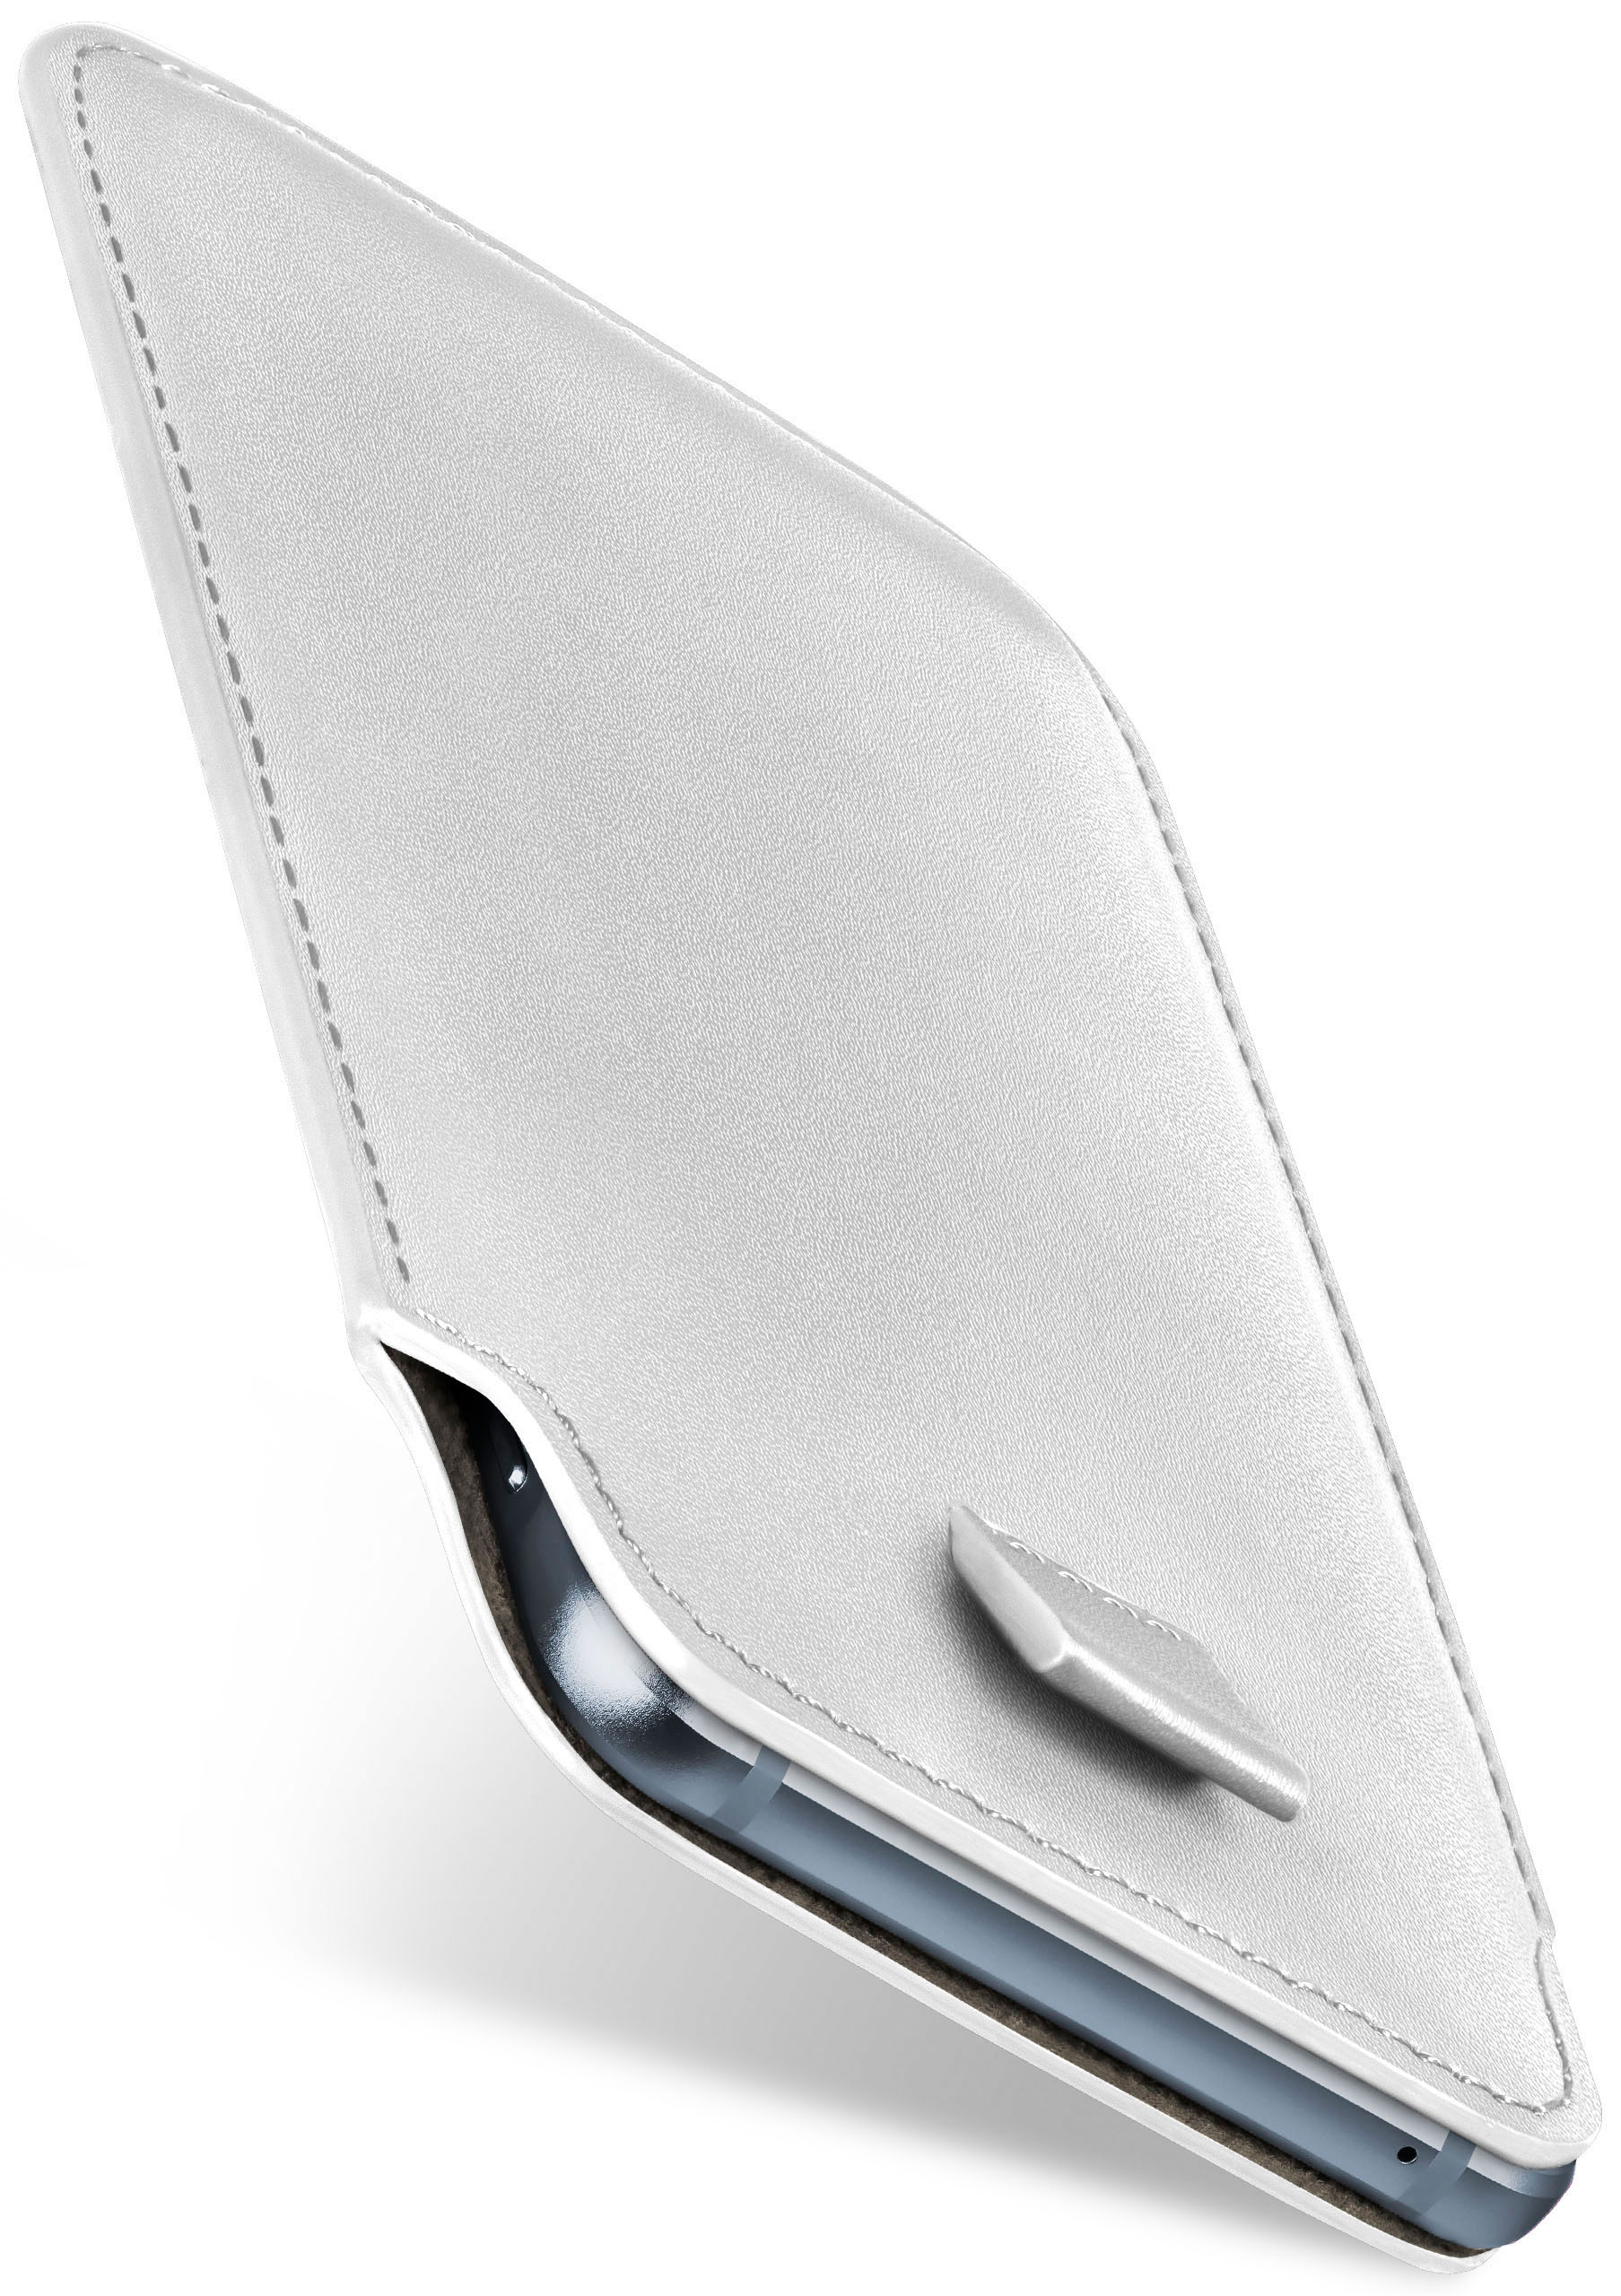 MOEX Slide Full Eco, Case, Shiny-White Emporia, Cover